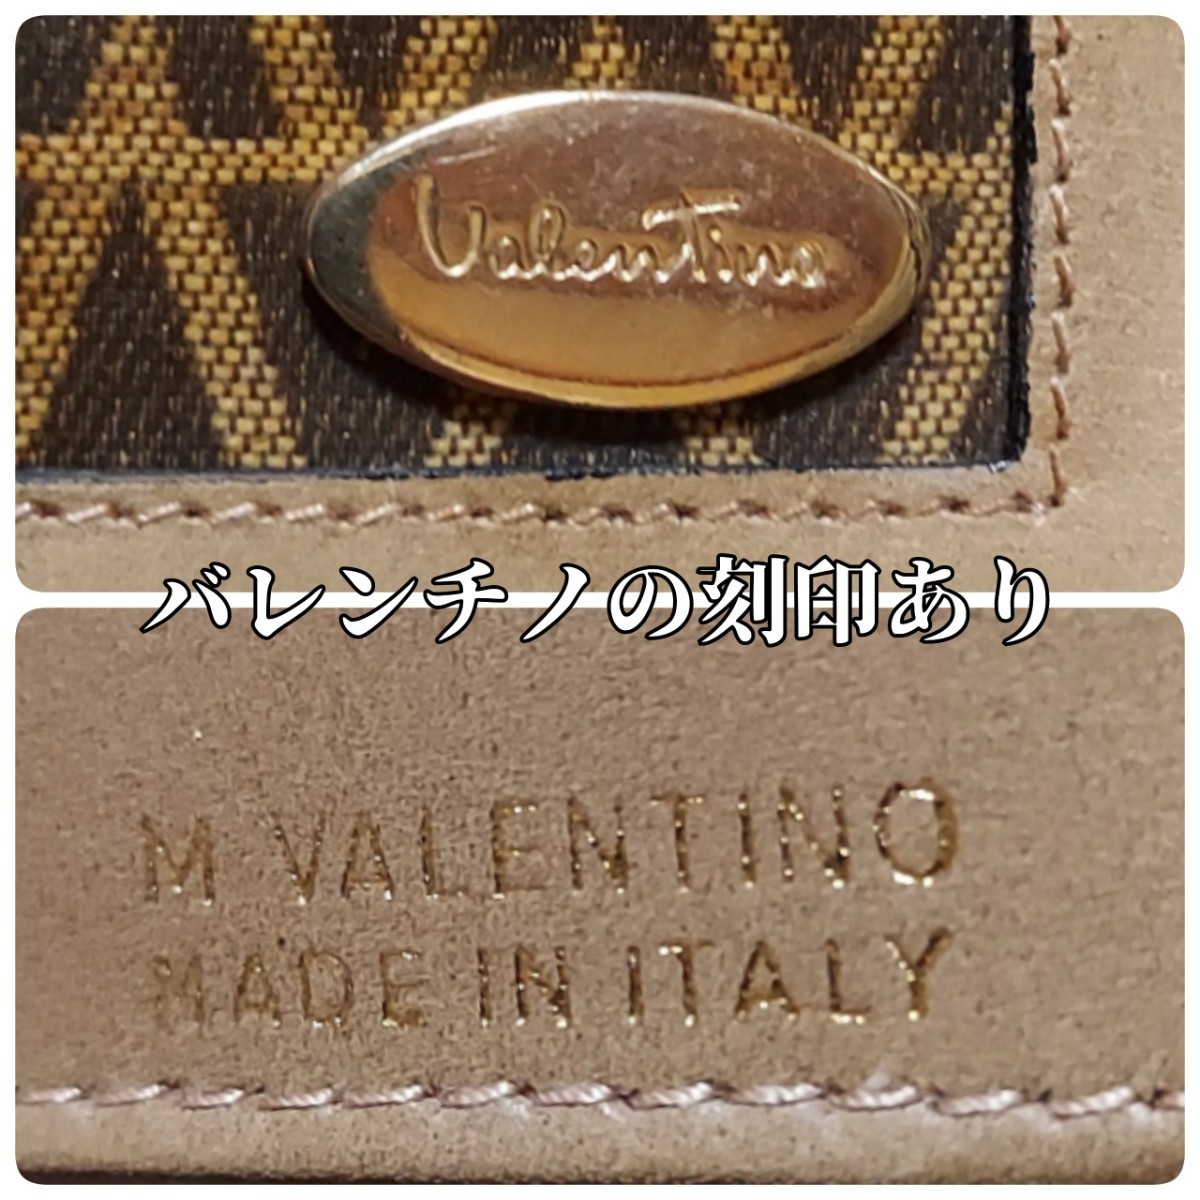  Valentino VALENTINO long wallet . inserting 